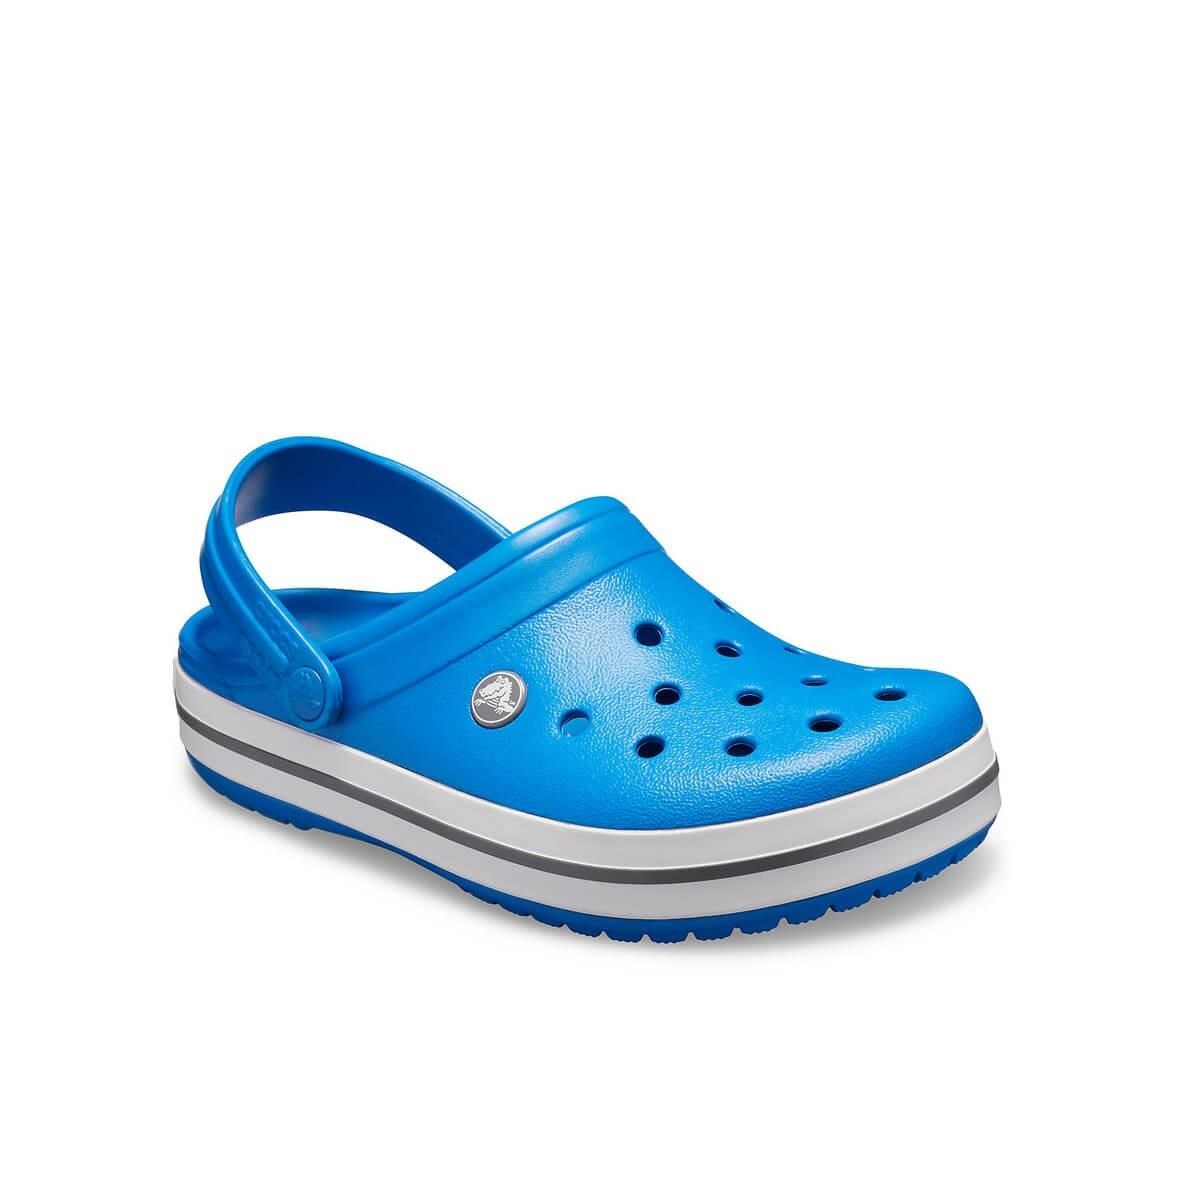 Crocs Crocband Bayan Terlik - Mavi